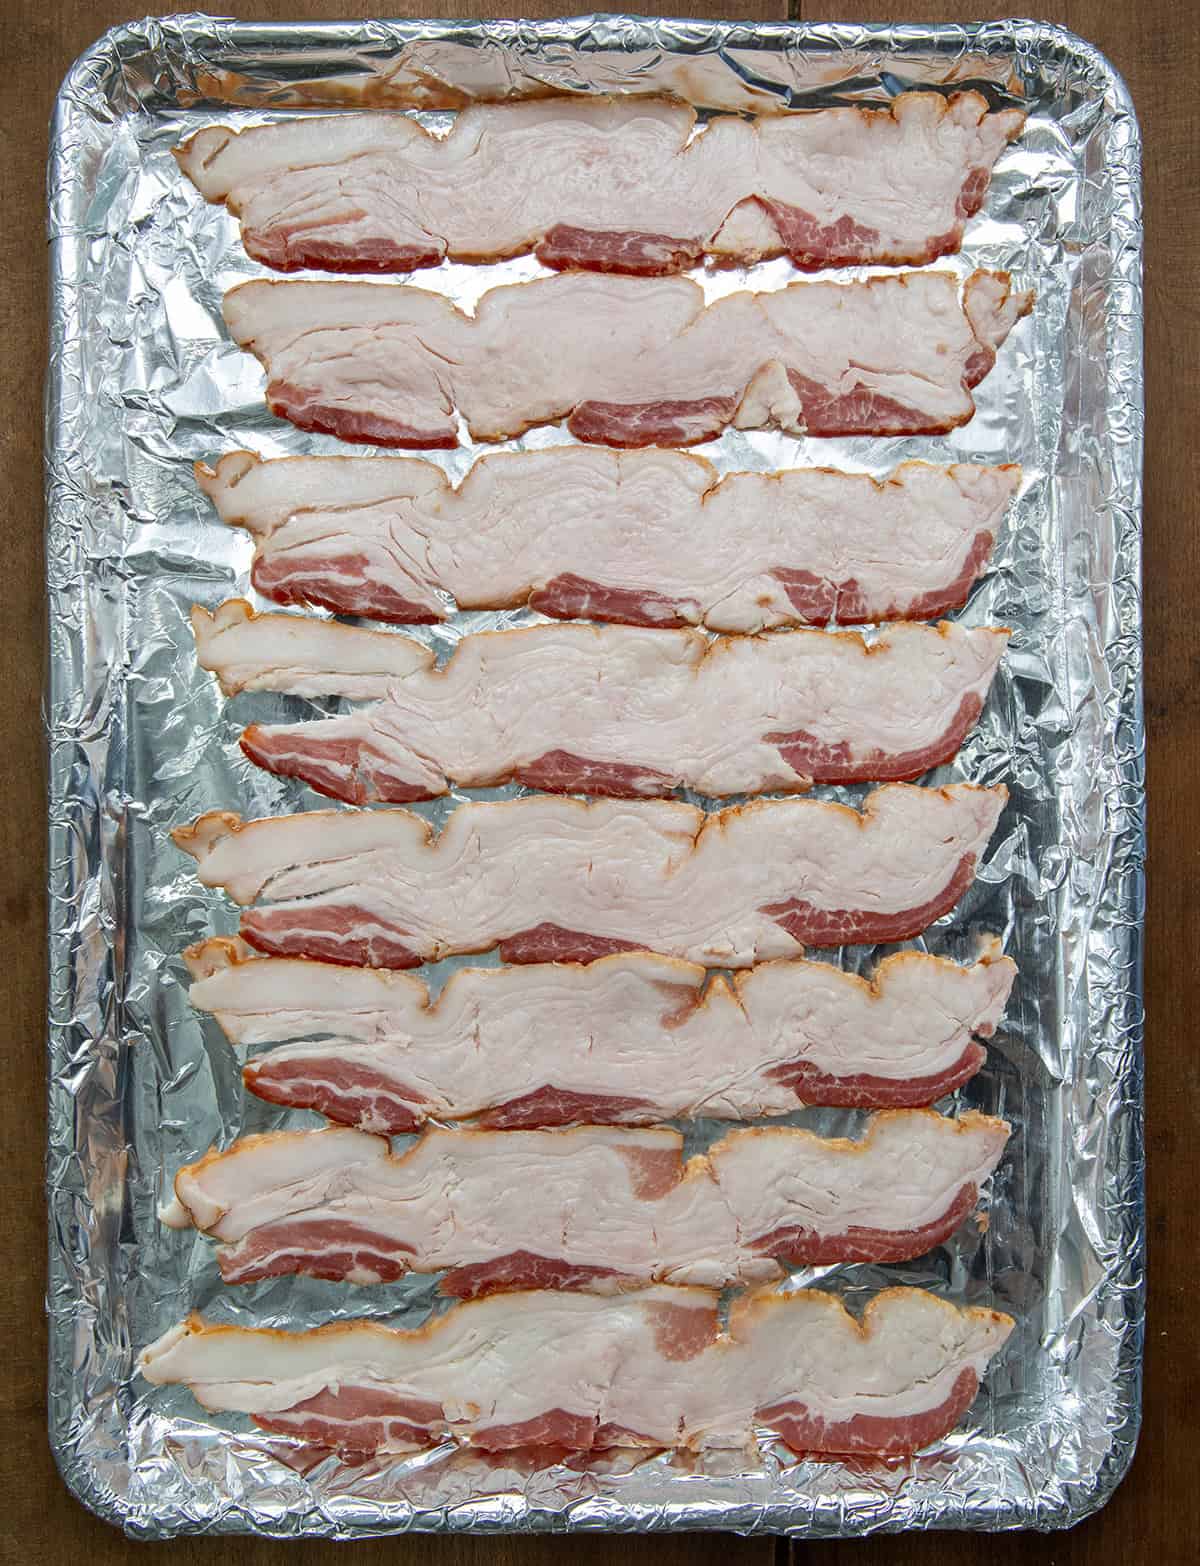 Sheet pan of raw bacon before baking.